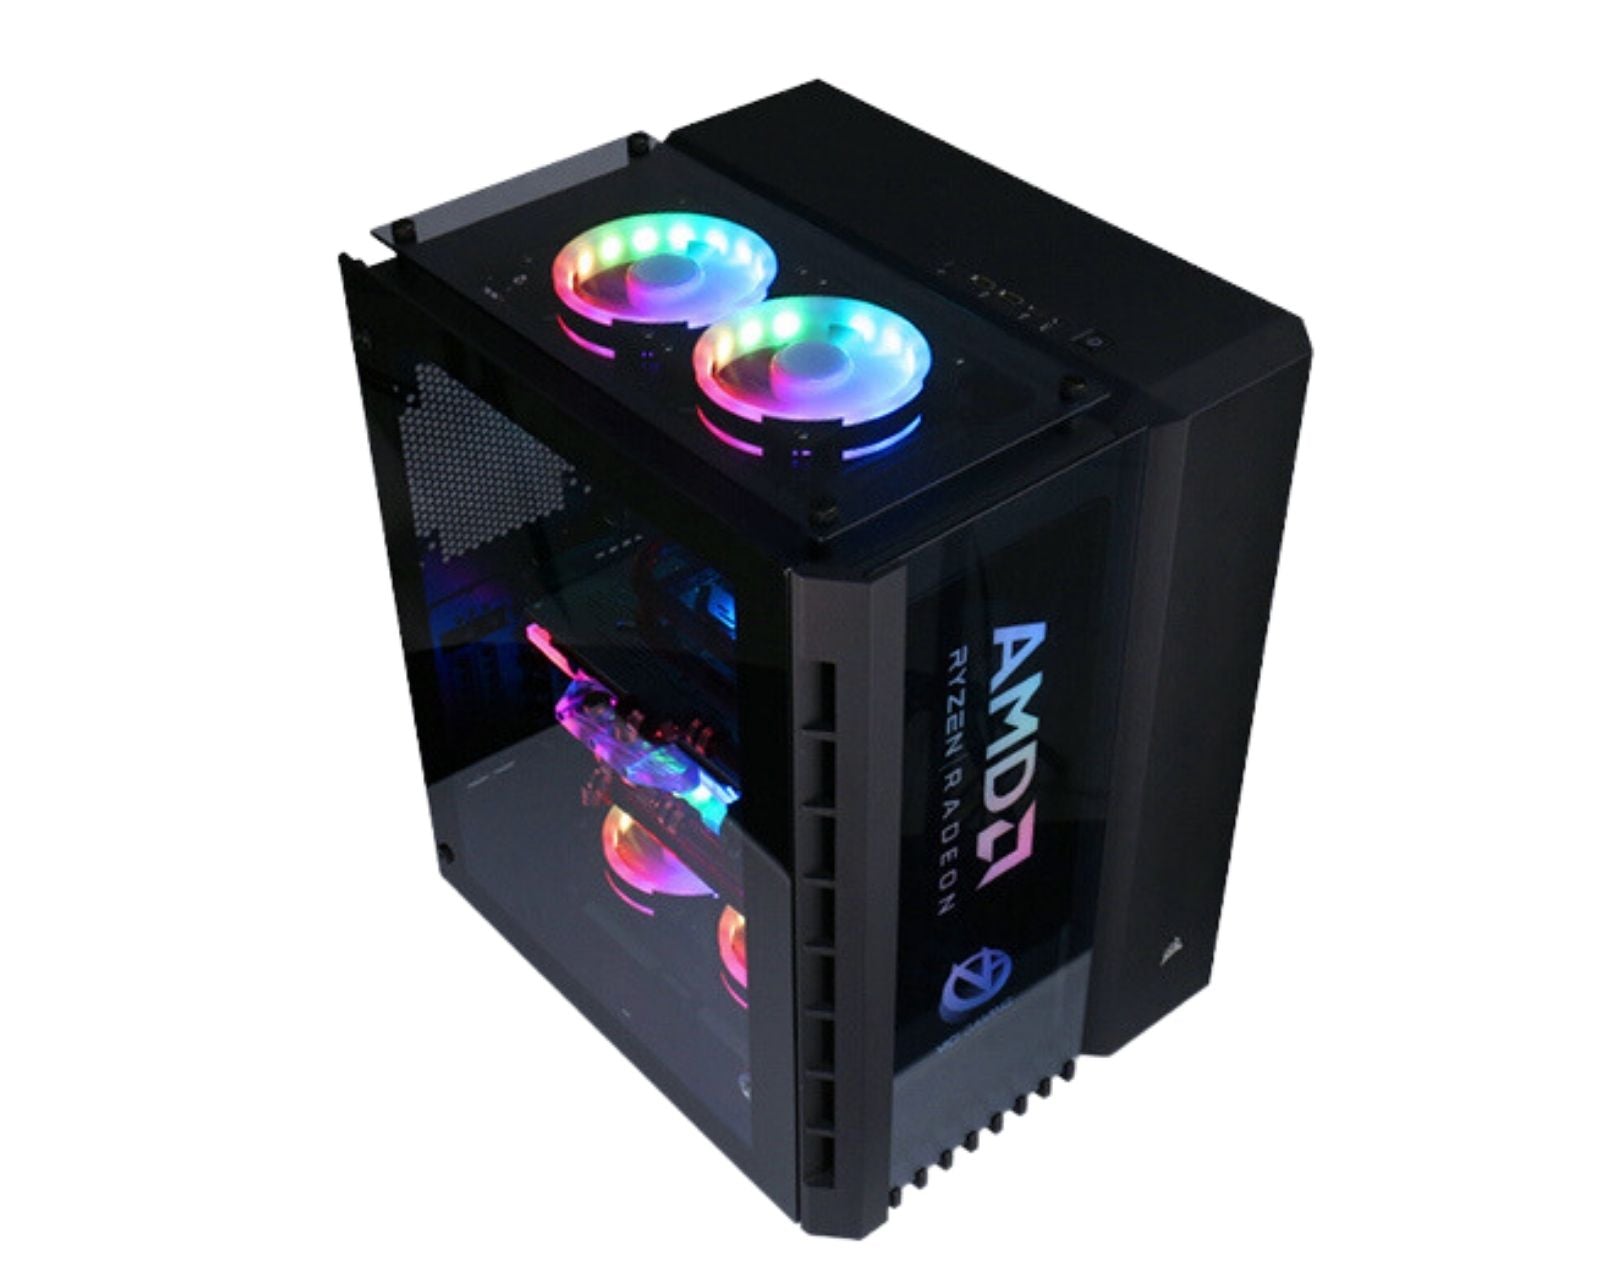 Bykski Distro Plate For CORSAIR 680X - PMMA w/ 5v Addressable RGB(RBW) (RGV-COS-680X-P-KG) - DDC Pump With LCD